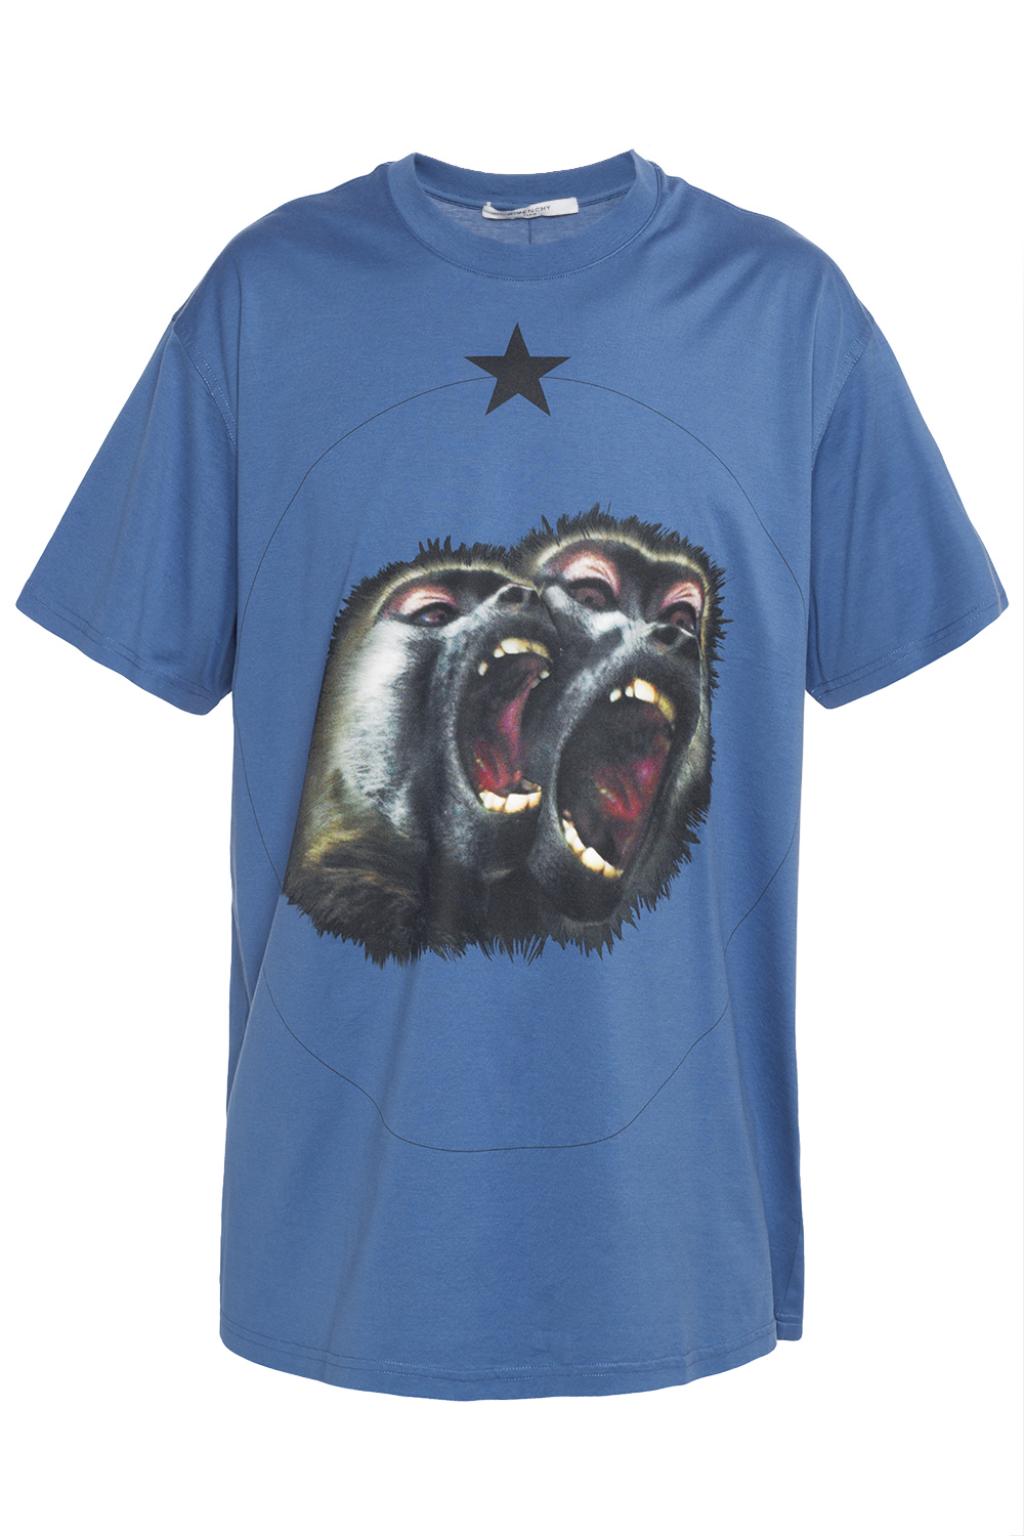 givenchy gorilla t shirt